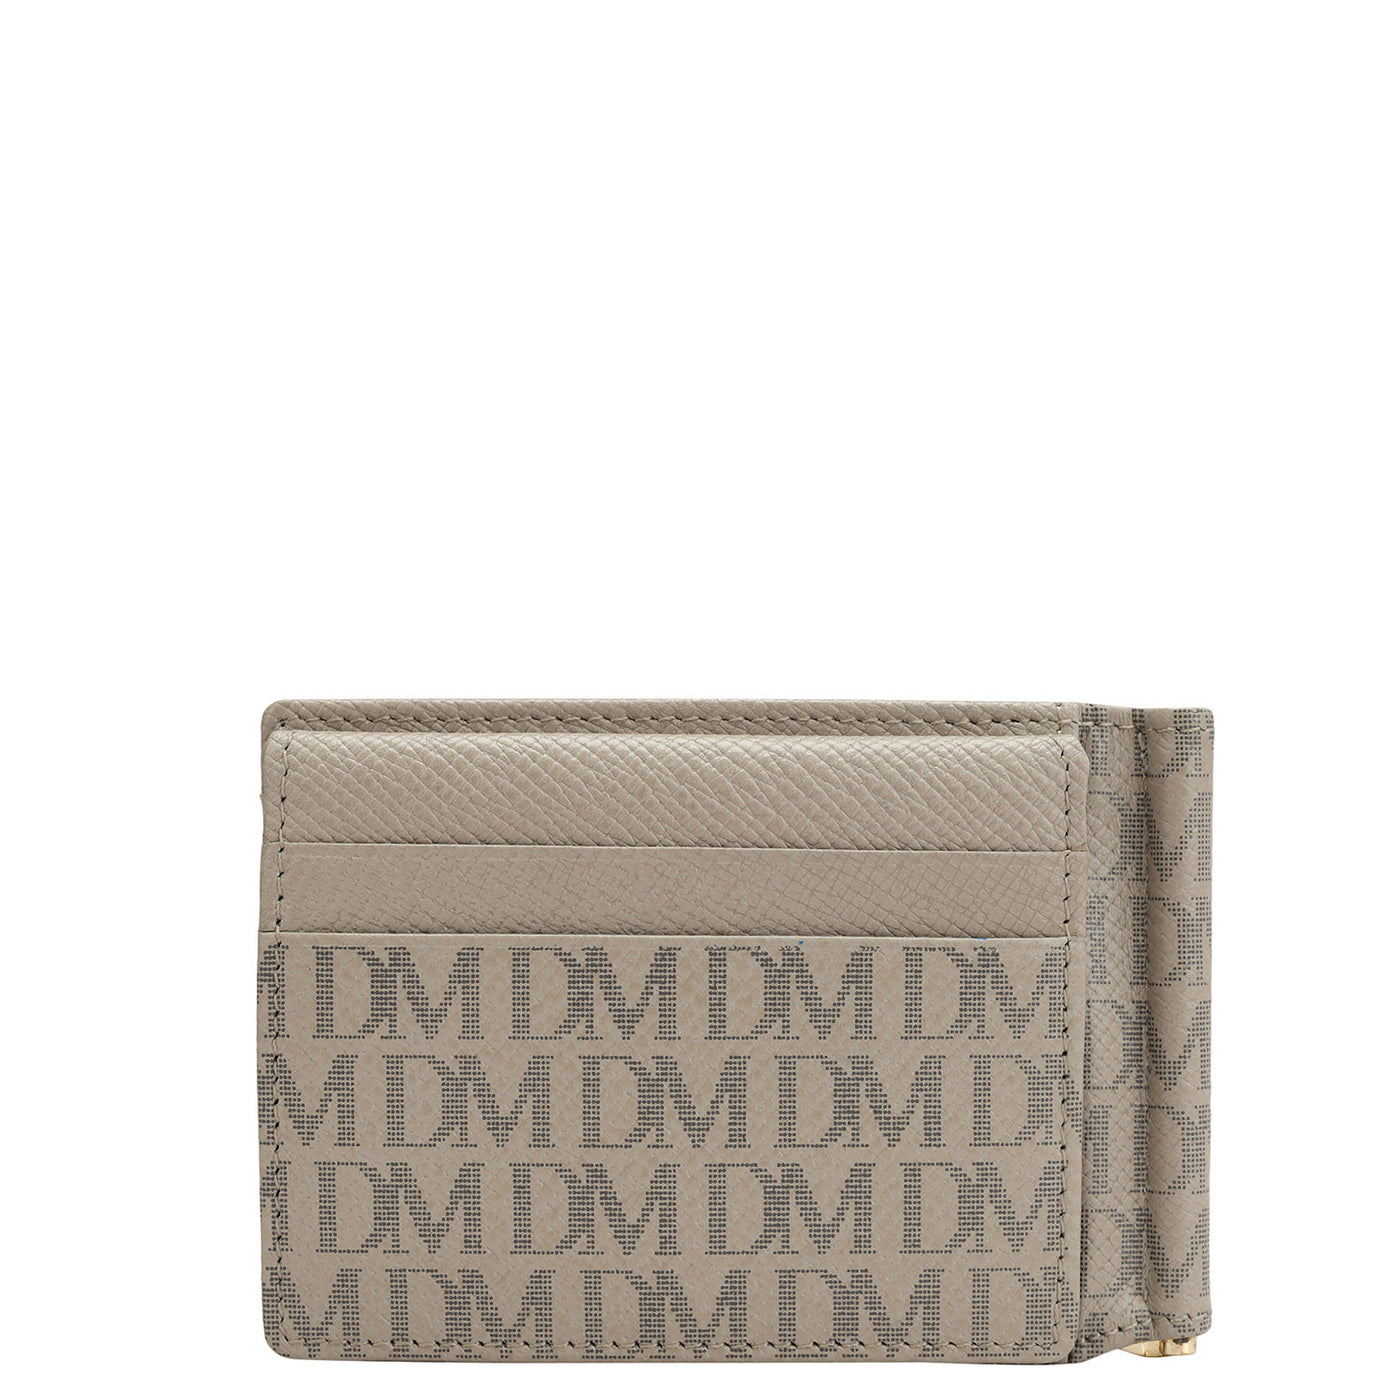 Monogram Leather Money Clip - Chalk